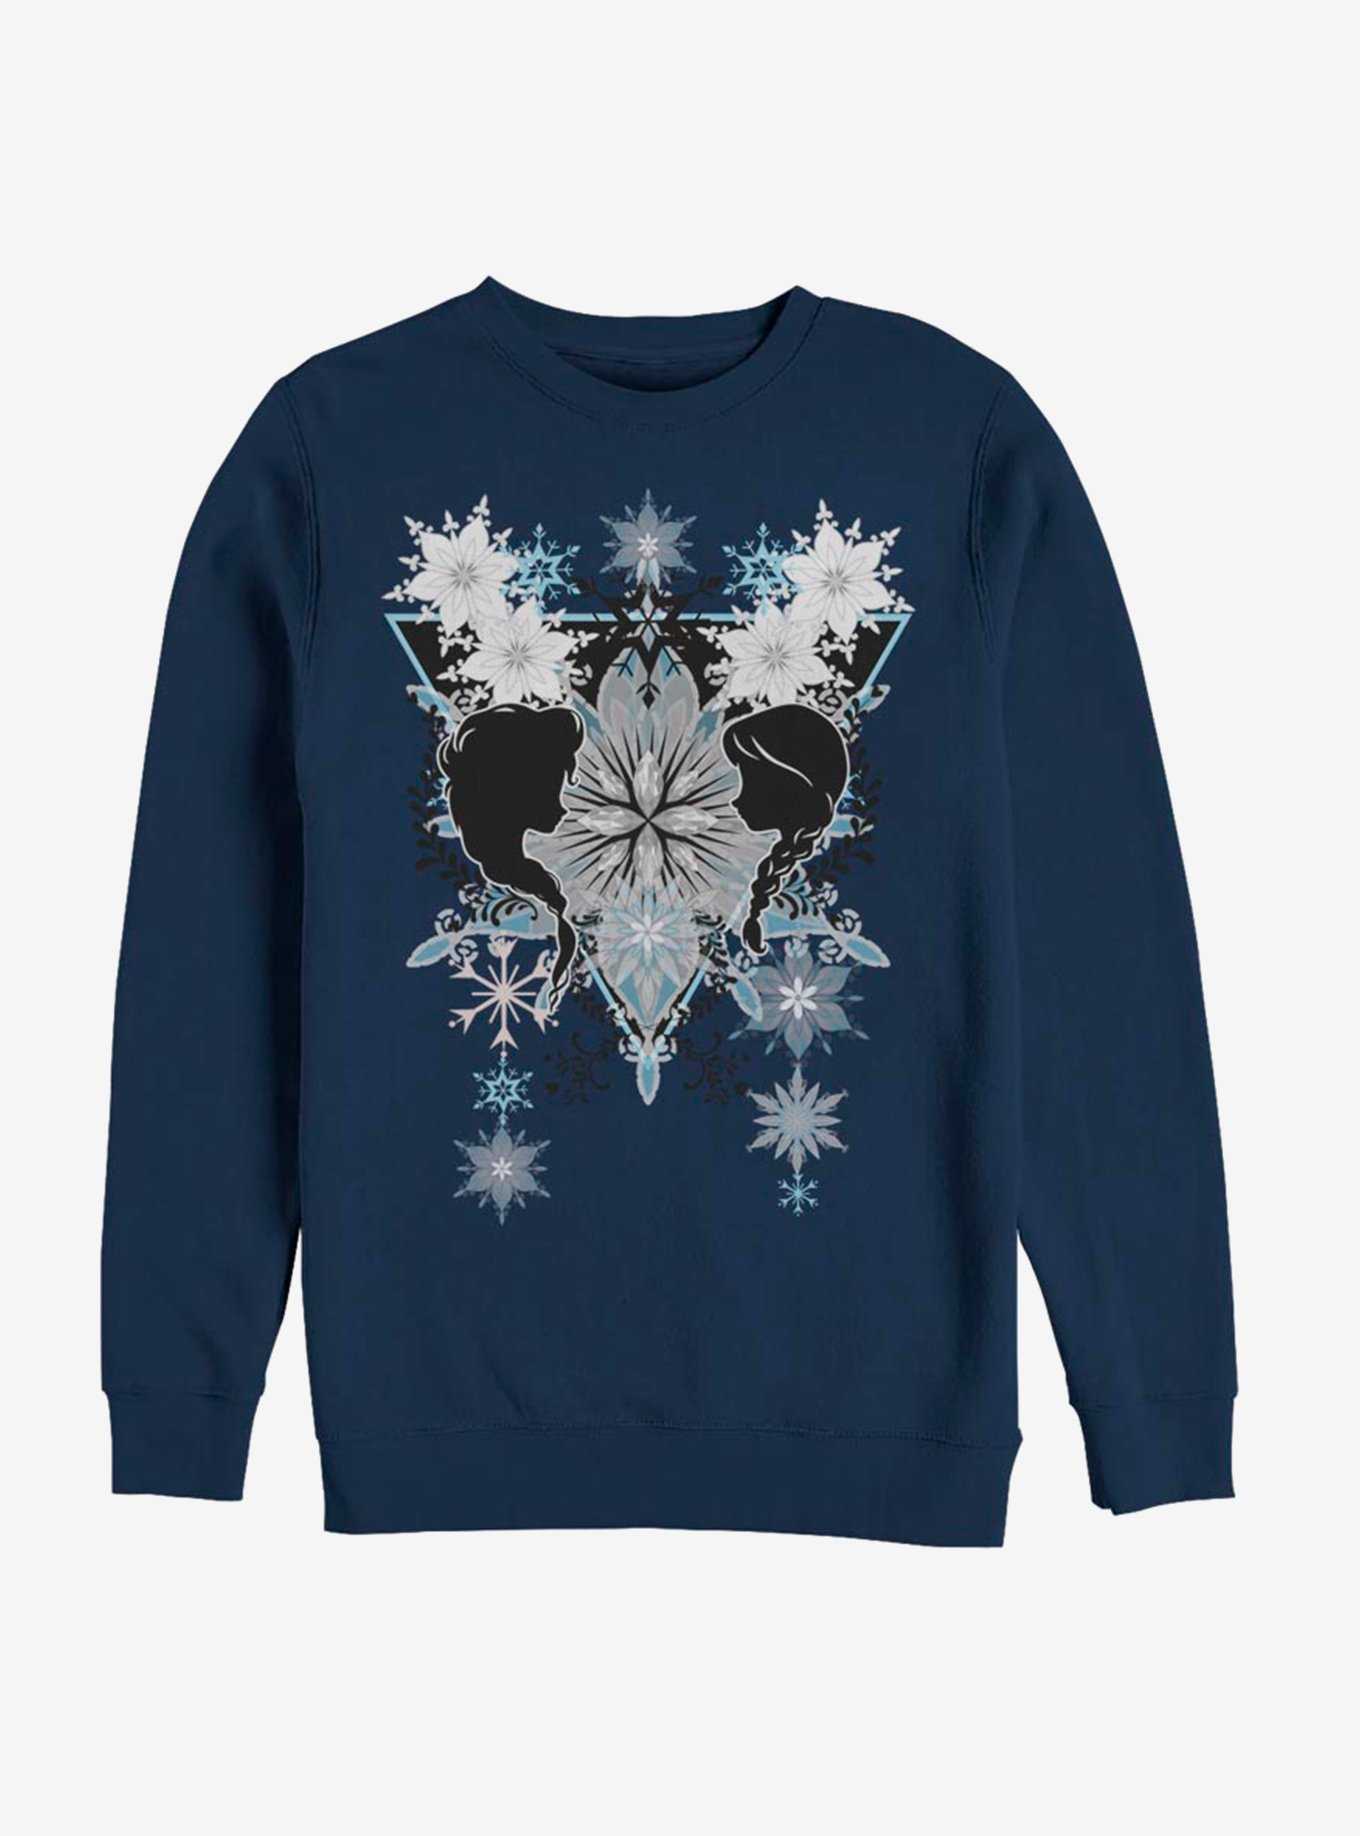 Disney Frozen Snowflake Boho Sweatshirt, , hi-res